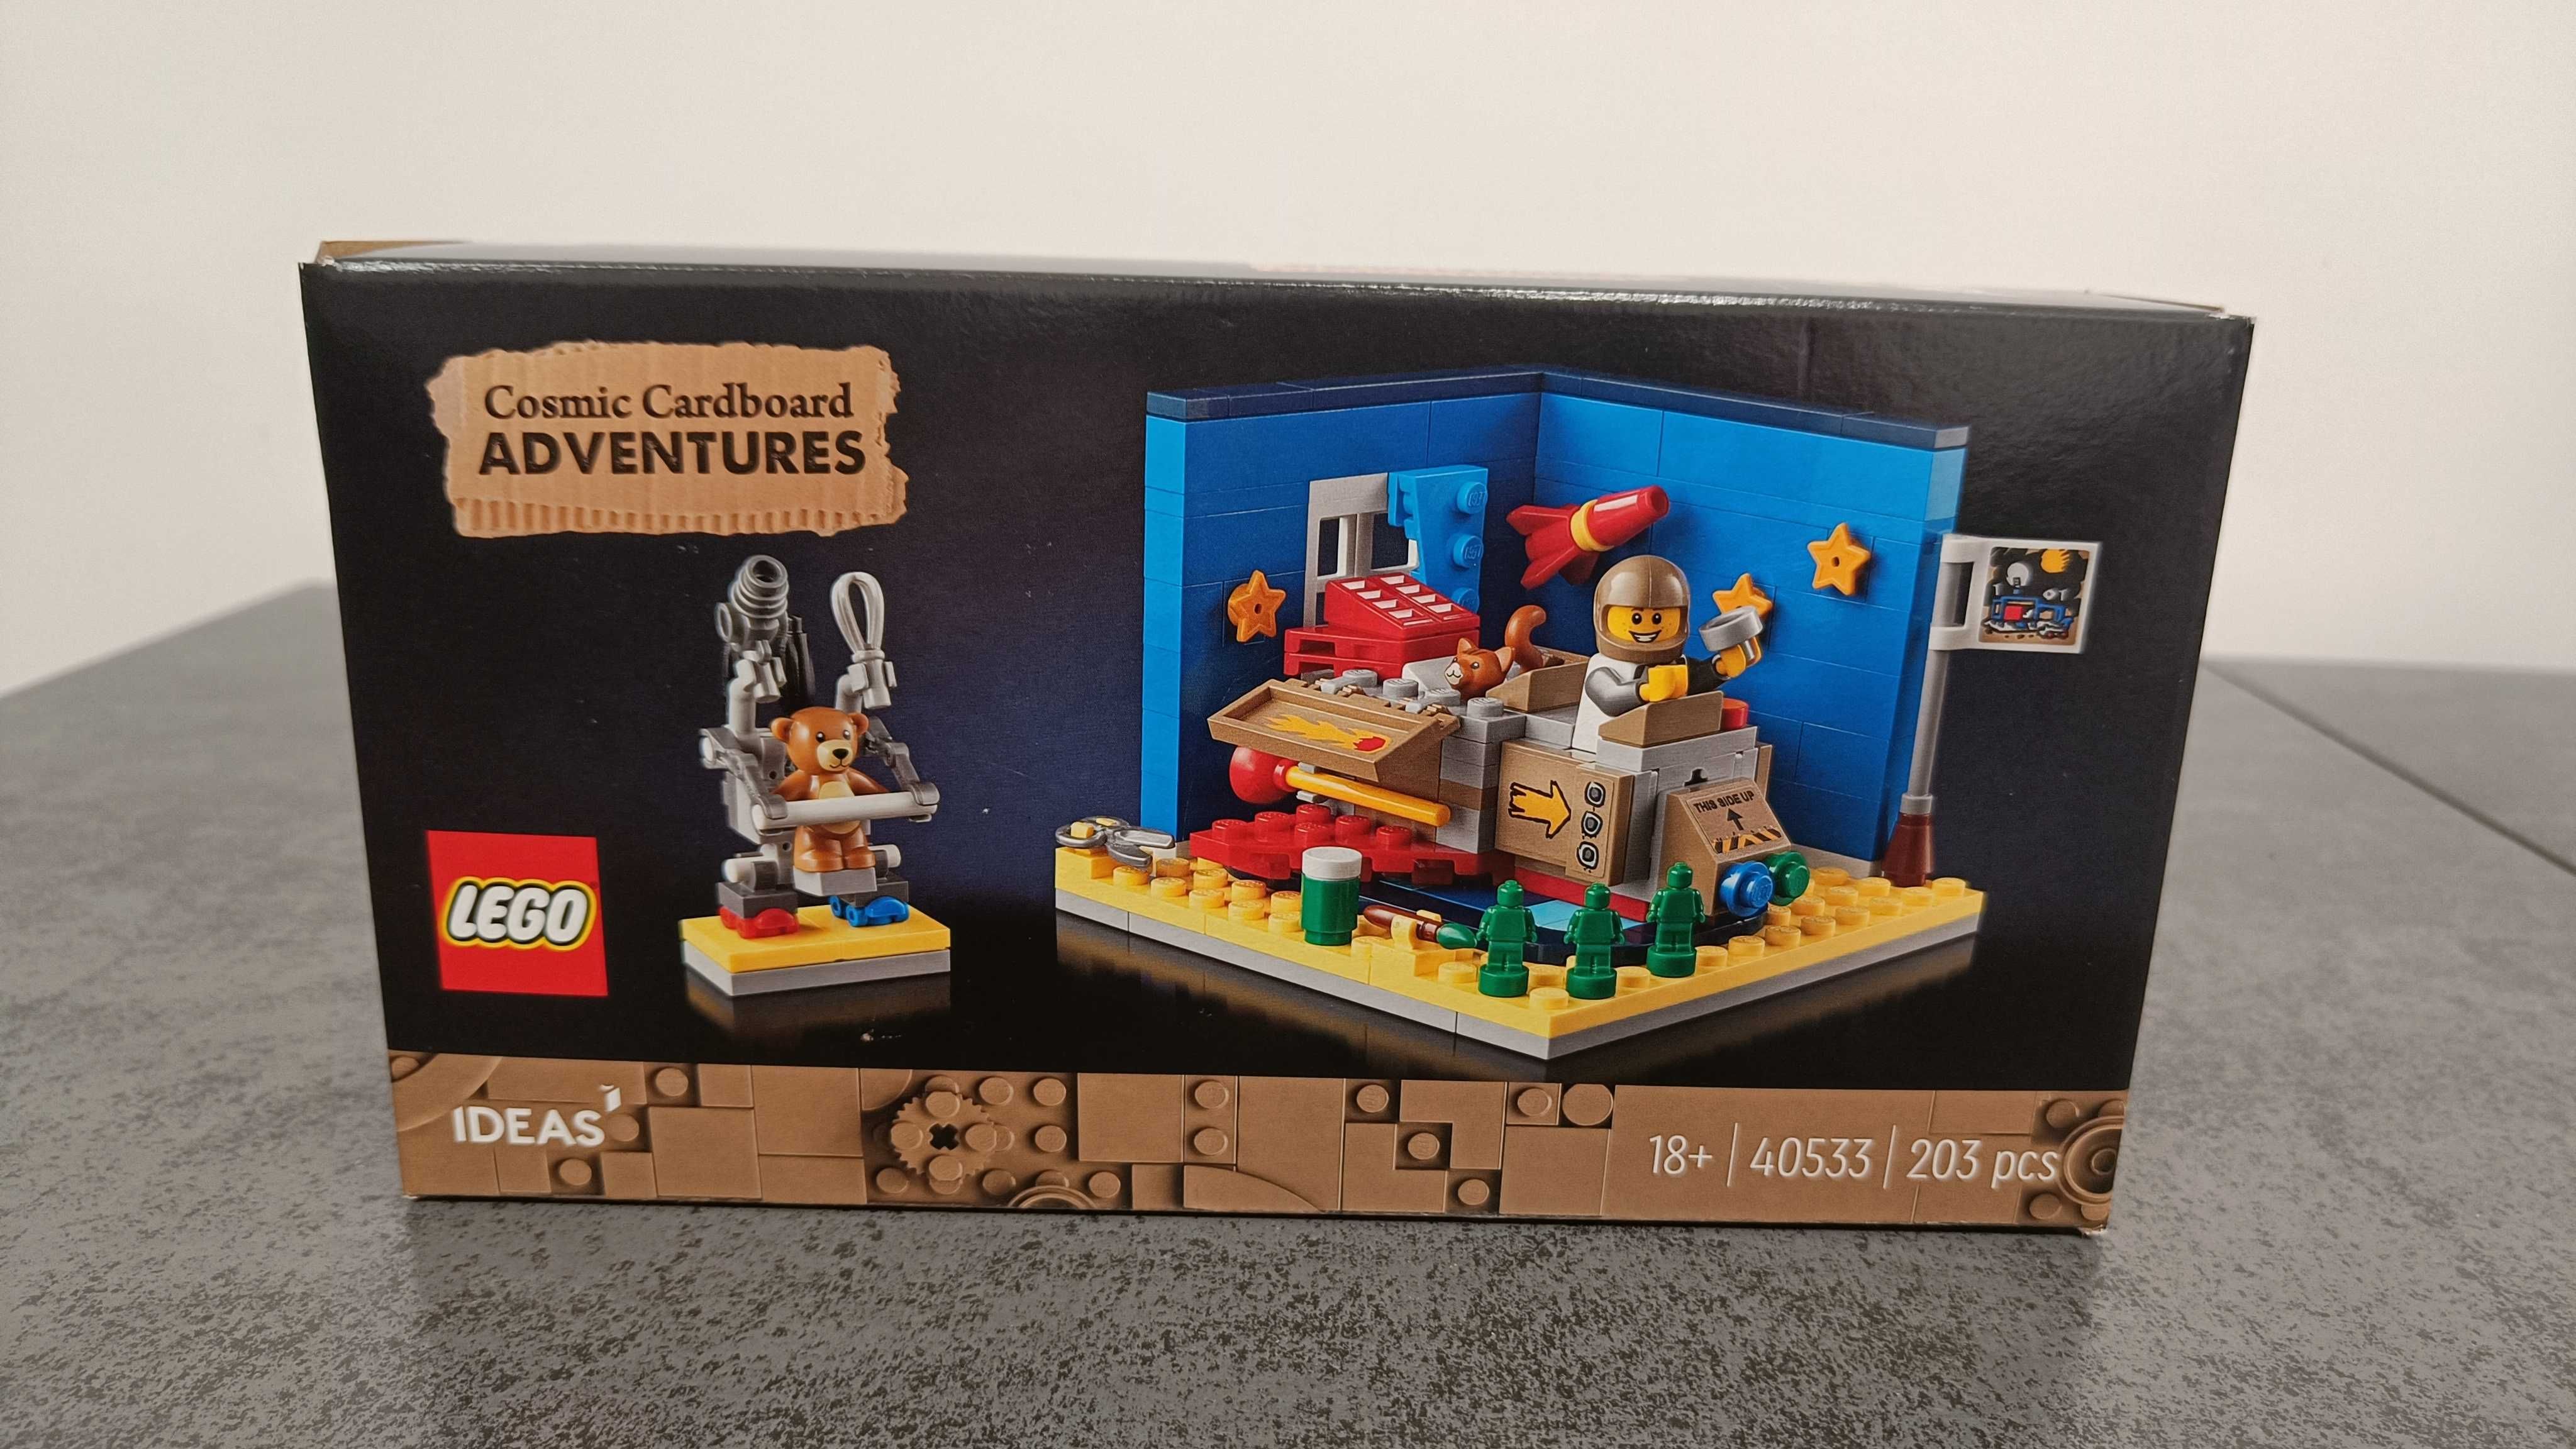 LEGO 40533 Ideas - Cosmic Cardboard Adventures